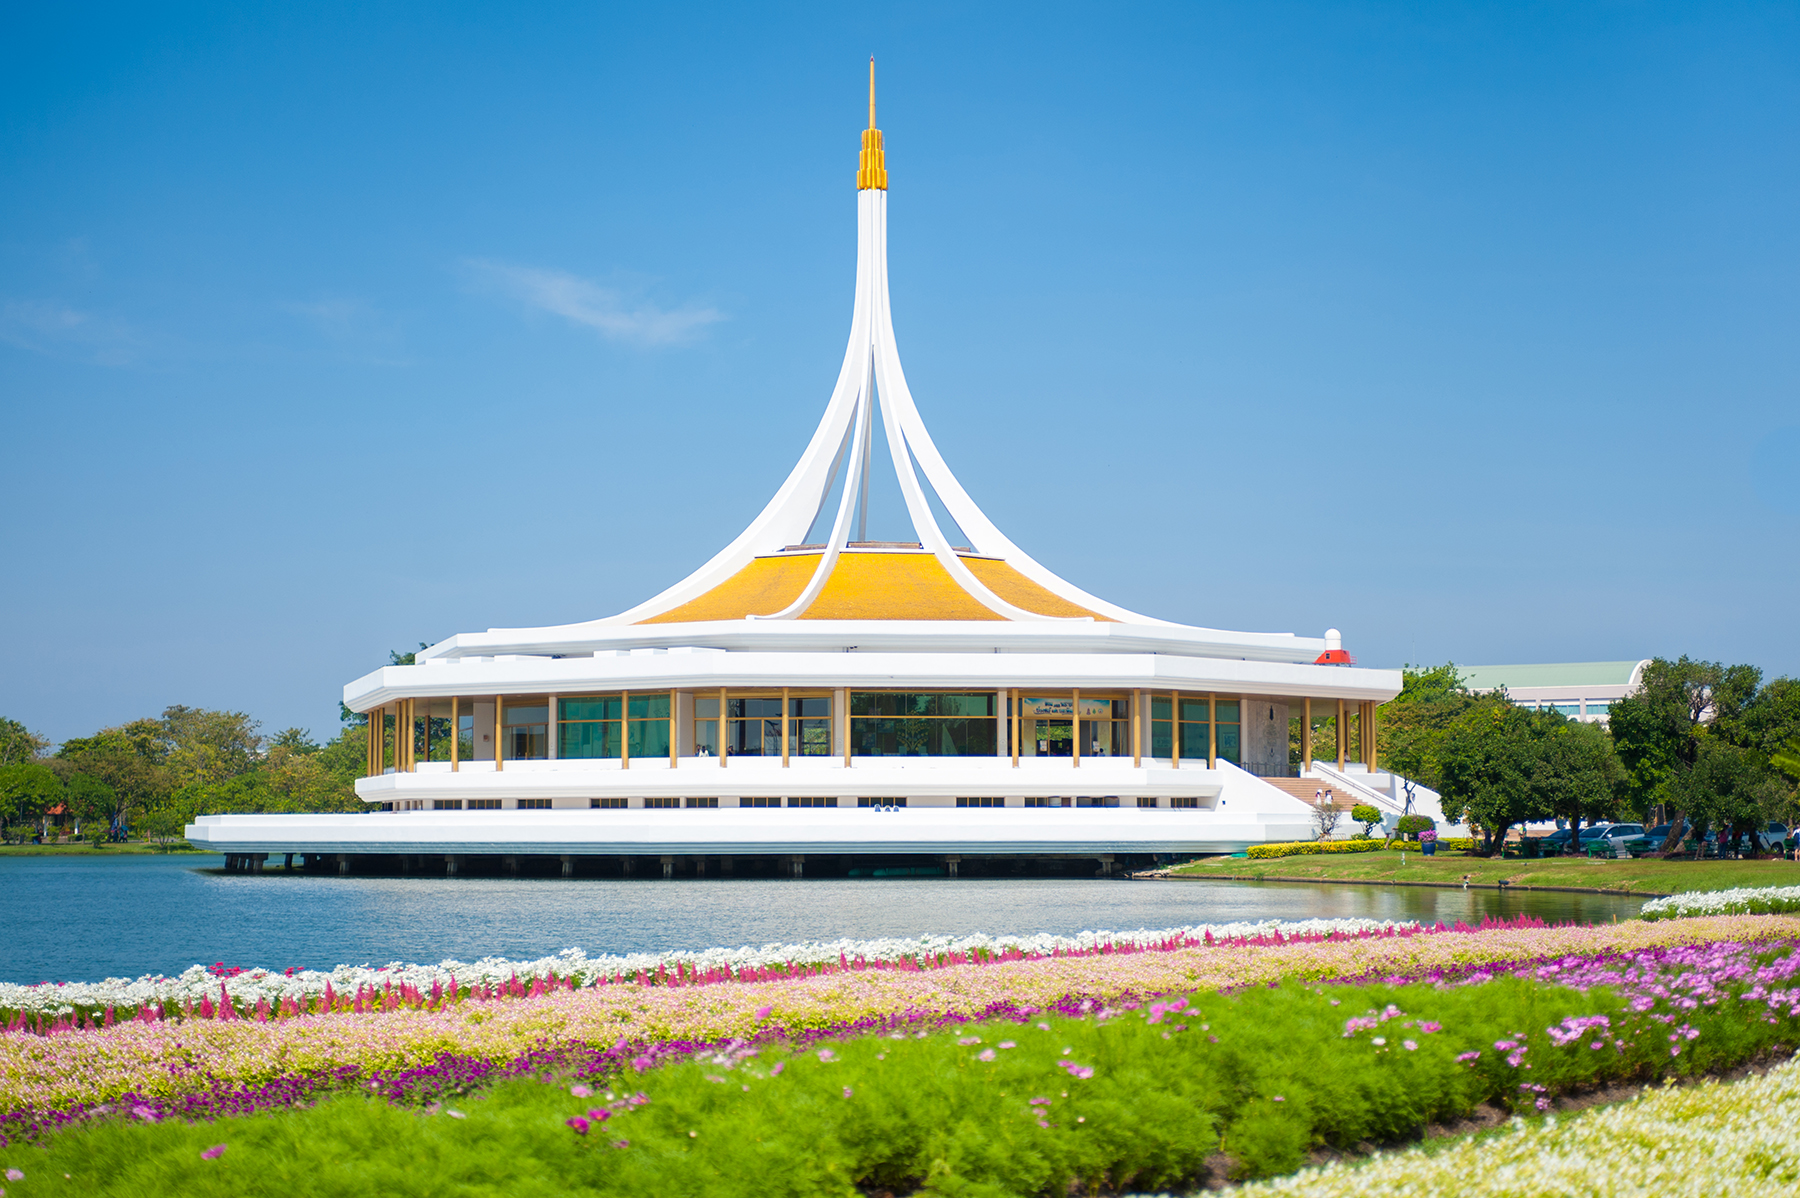 The King Rama IX Park (Suan Luang Rama IX) in Bangkok